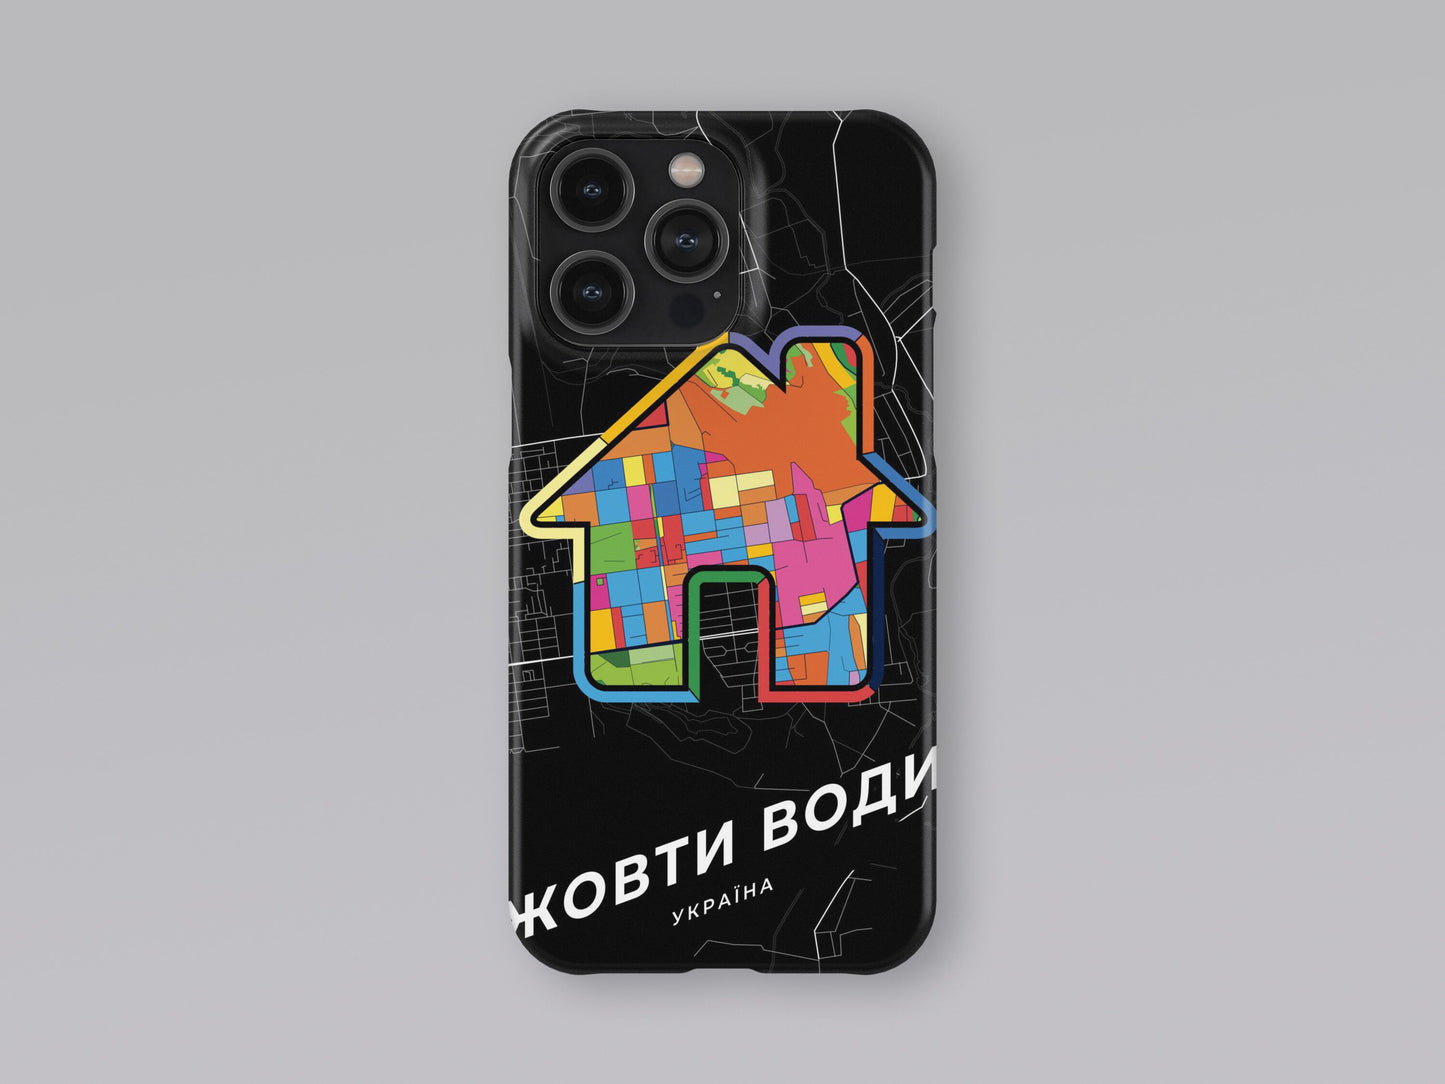 Zhovti Vody Ukraine slim phone case with colorful icon 3